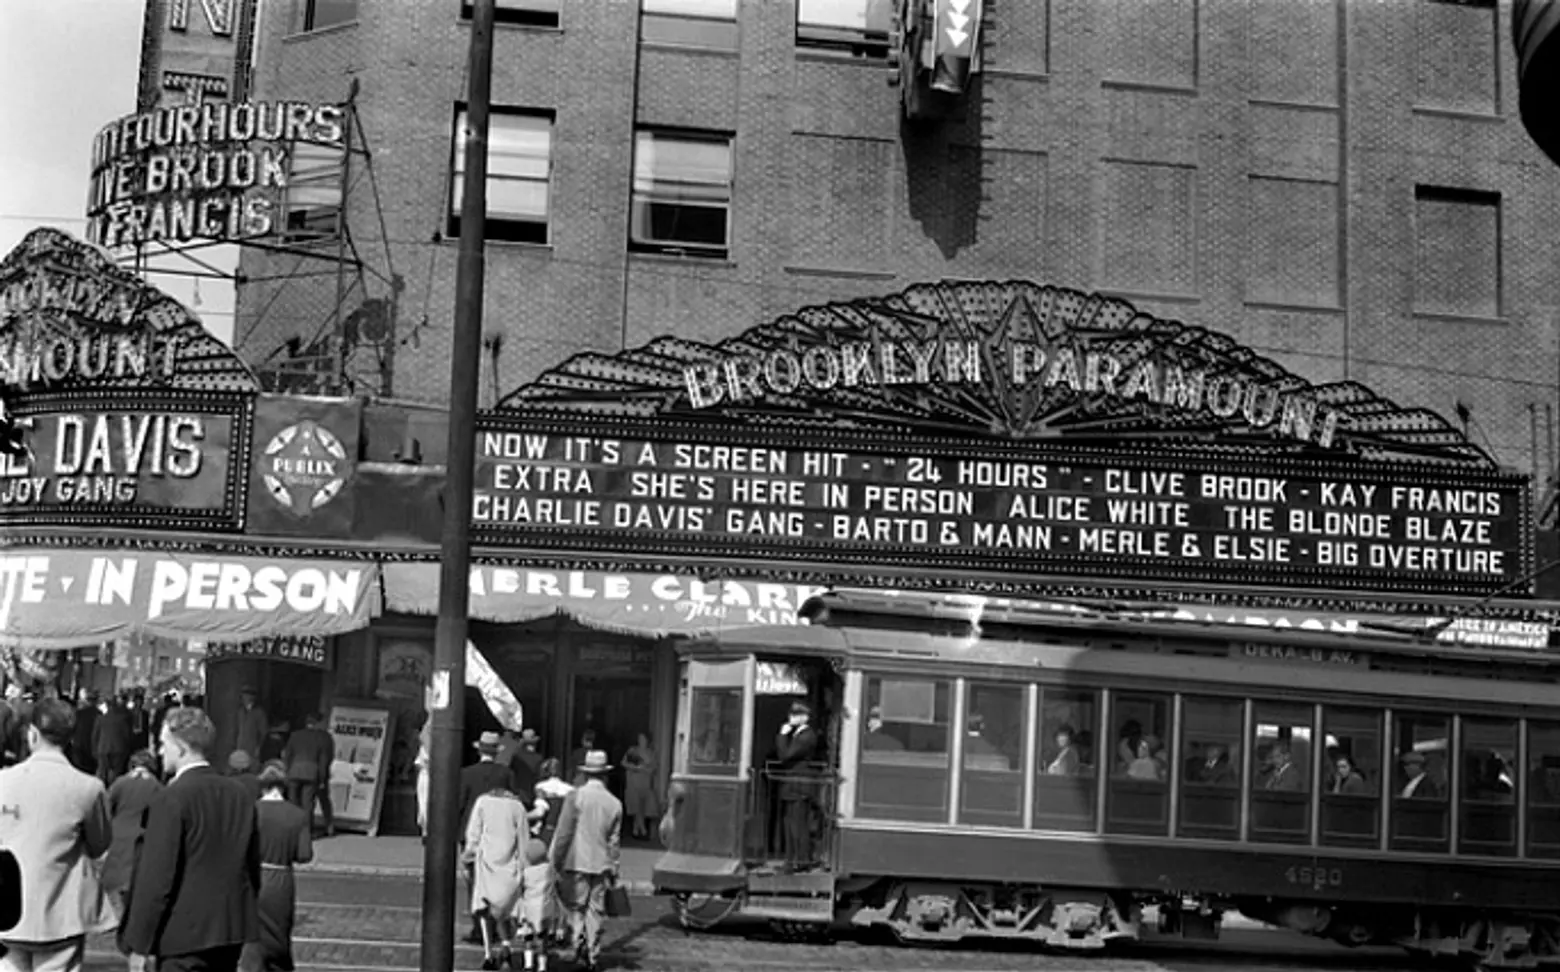 Brooklyn Paramount Theatre